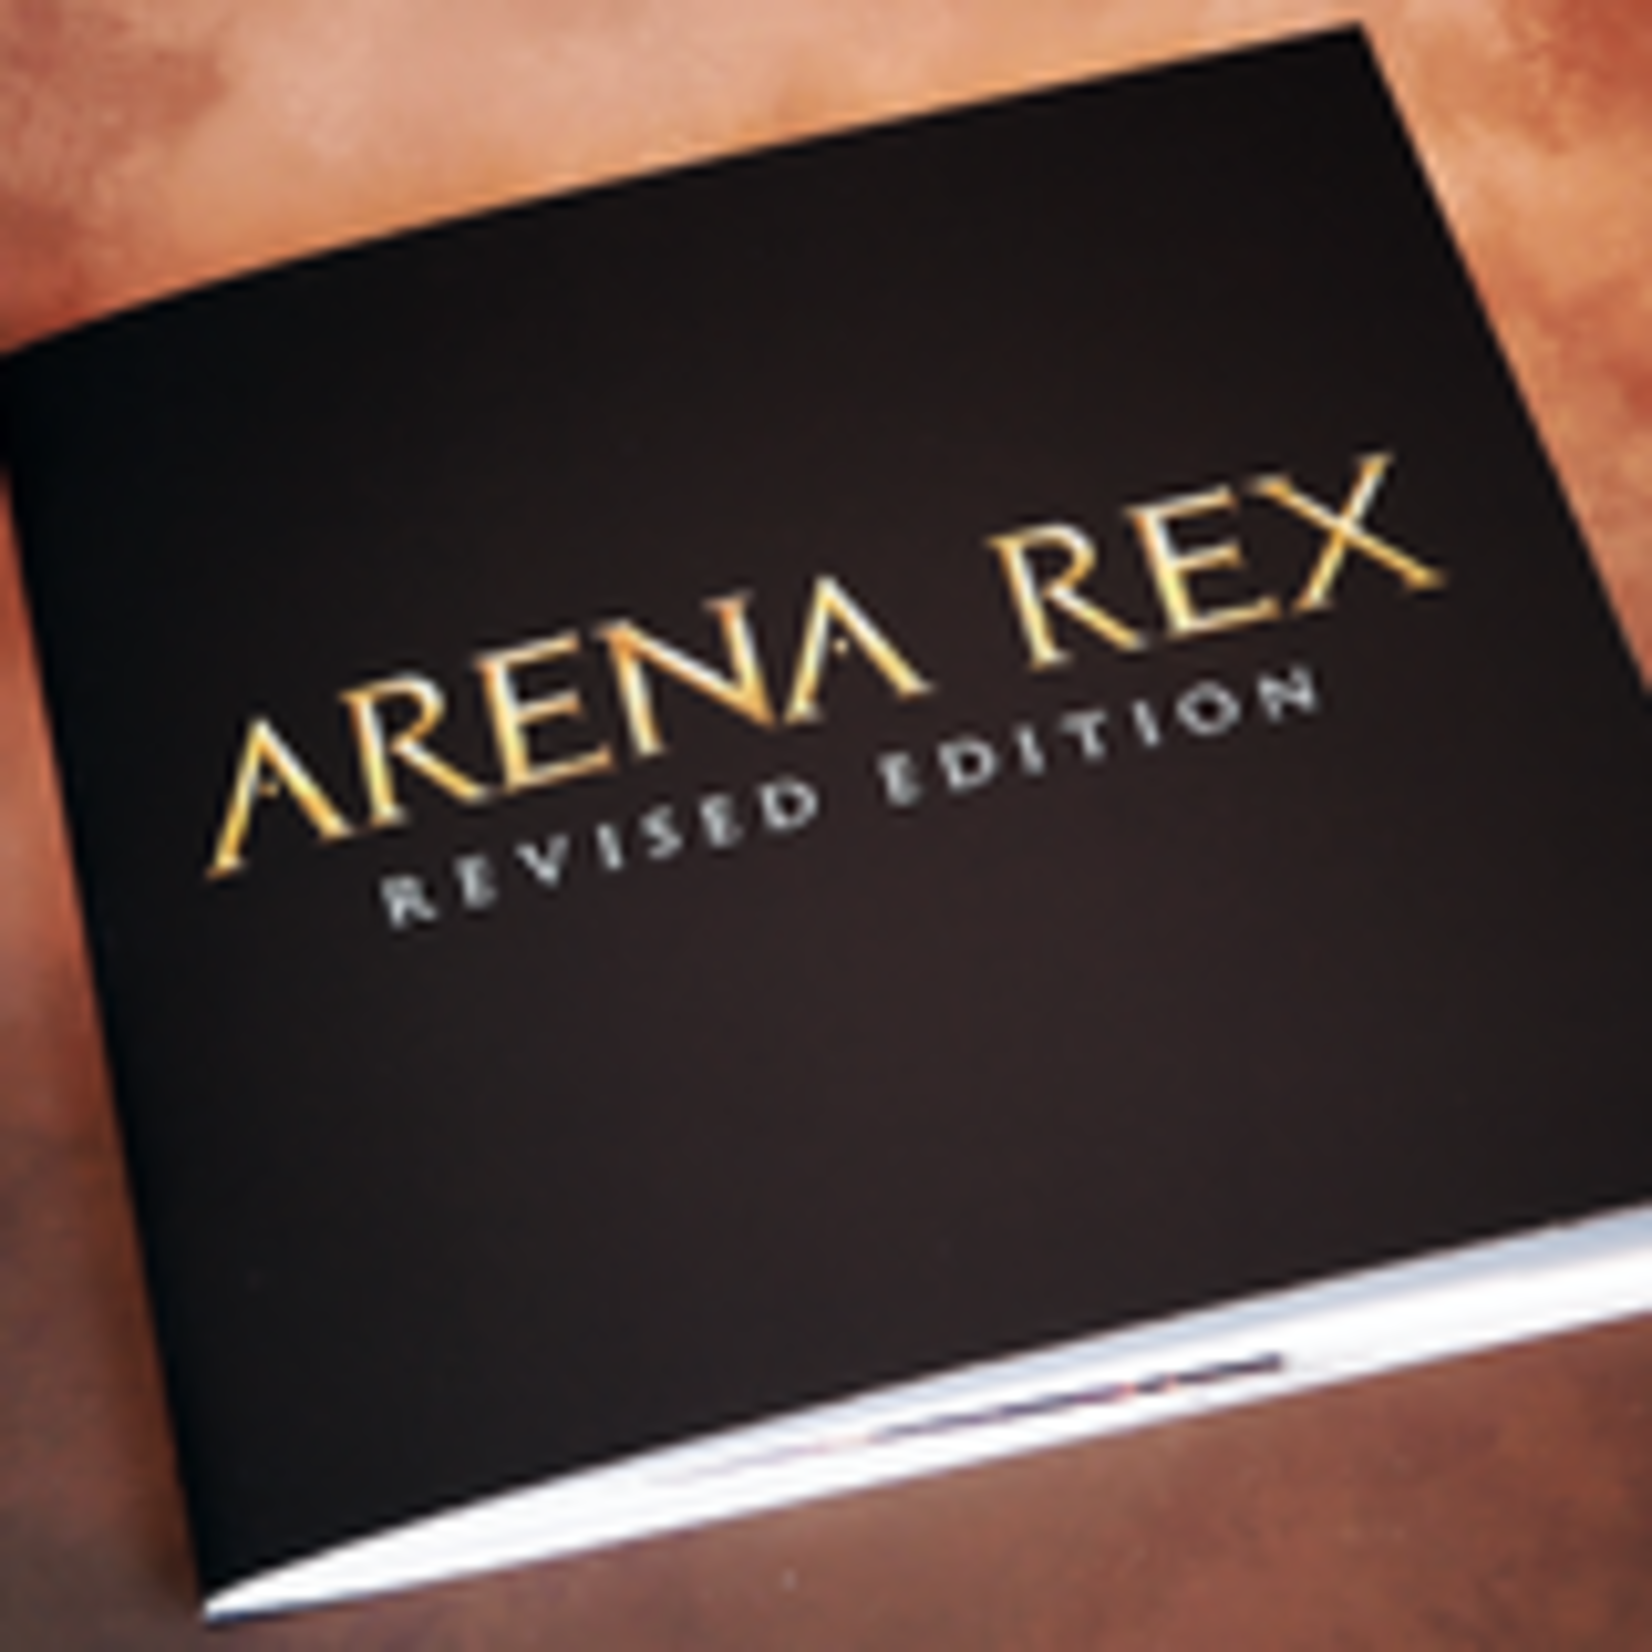 Arena Rex Rulebook